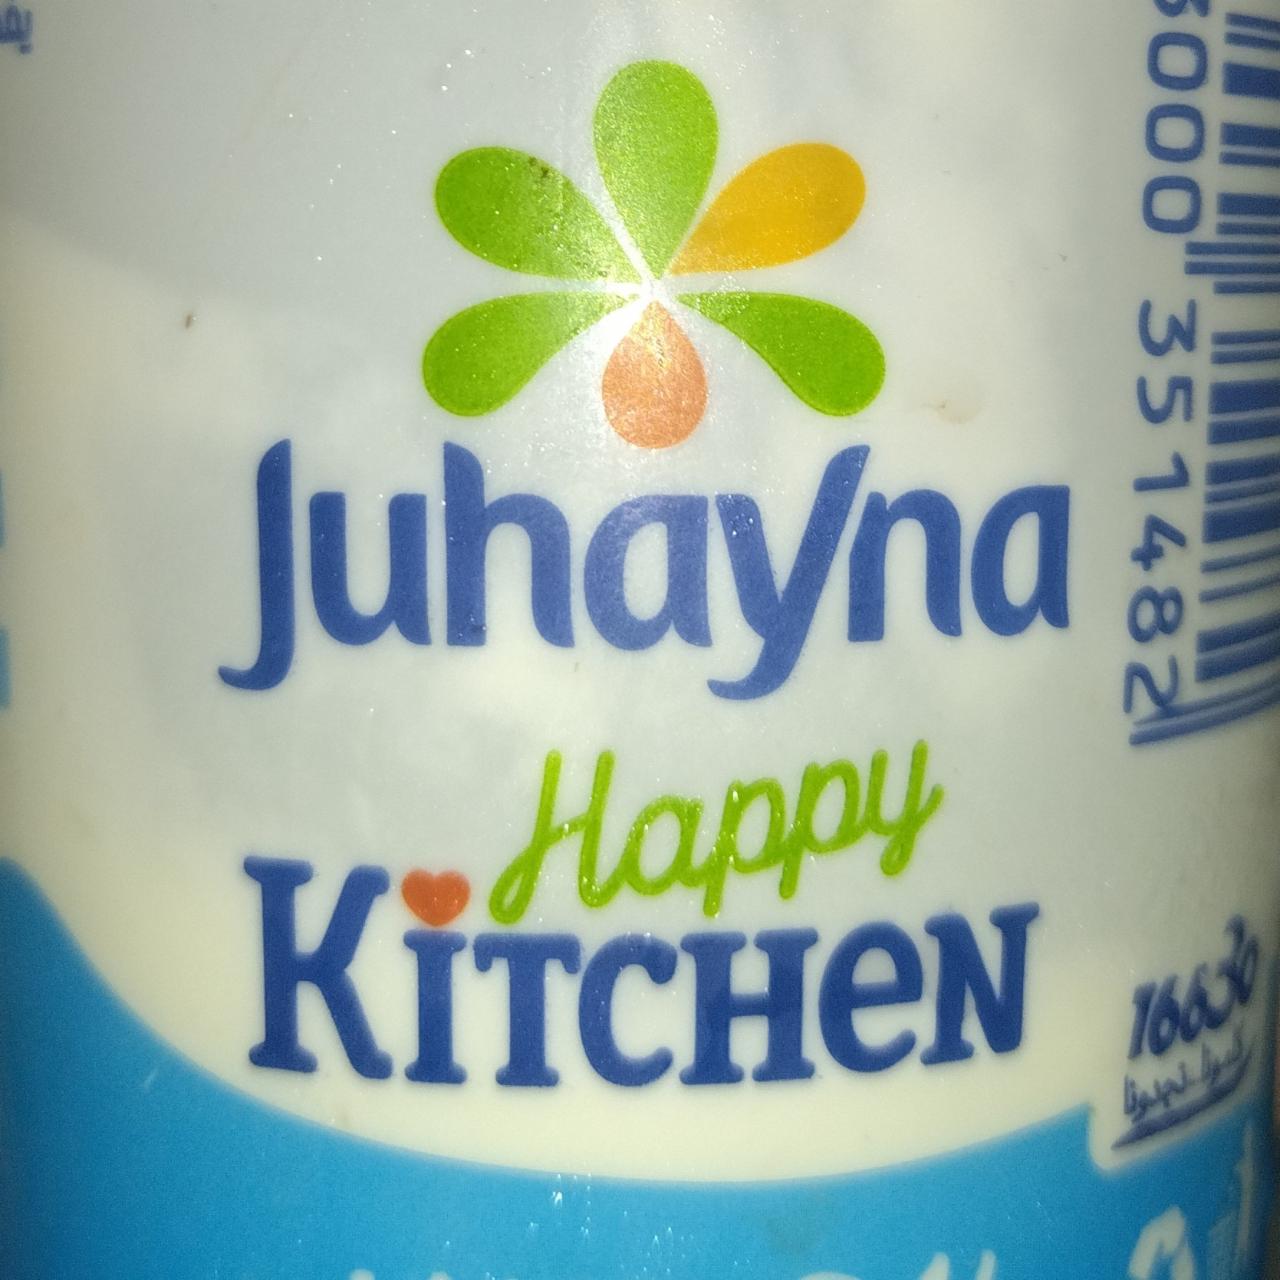 Фото - Yogurt Happy kitchen Juhayna